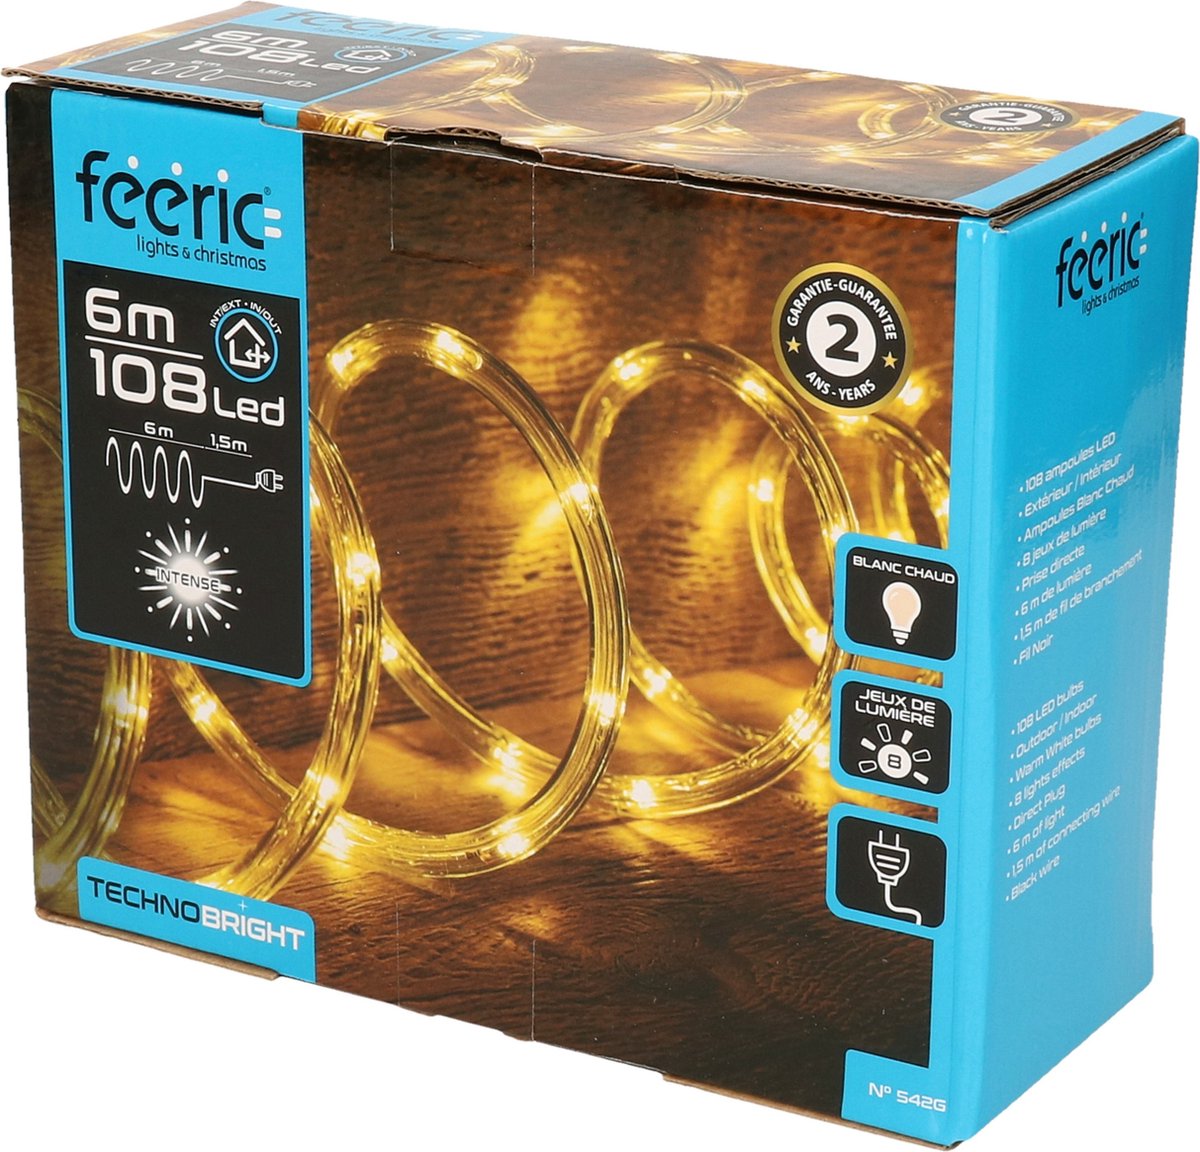 Feeric lights & Christmas Lichtslang - 6M - warm wit - 108 LEDs - Feeric lights & Christmas